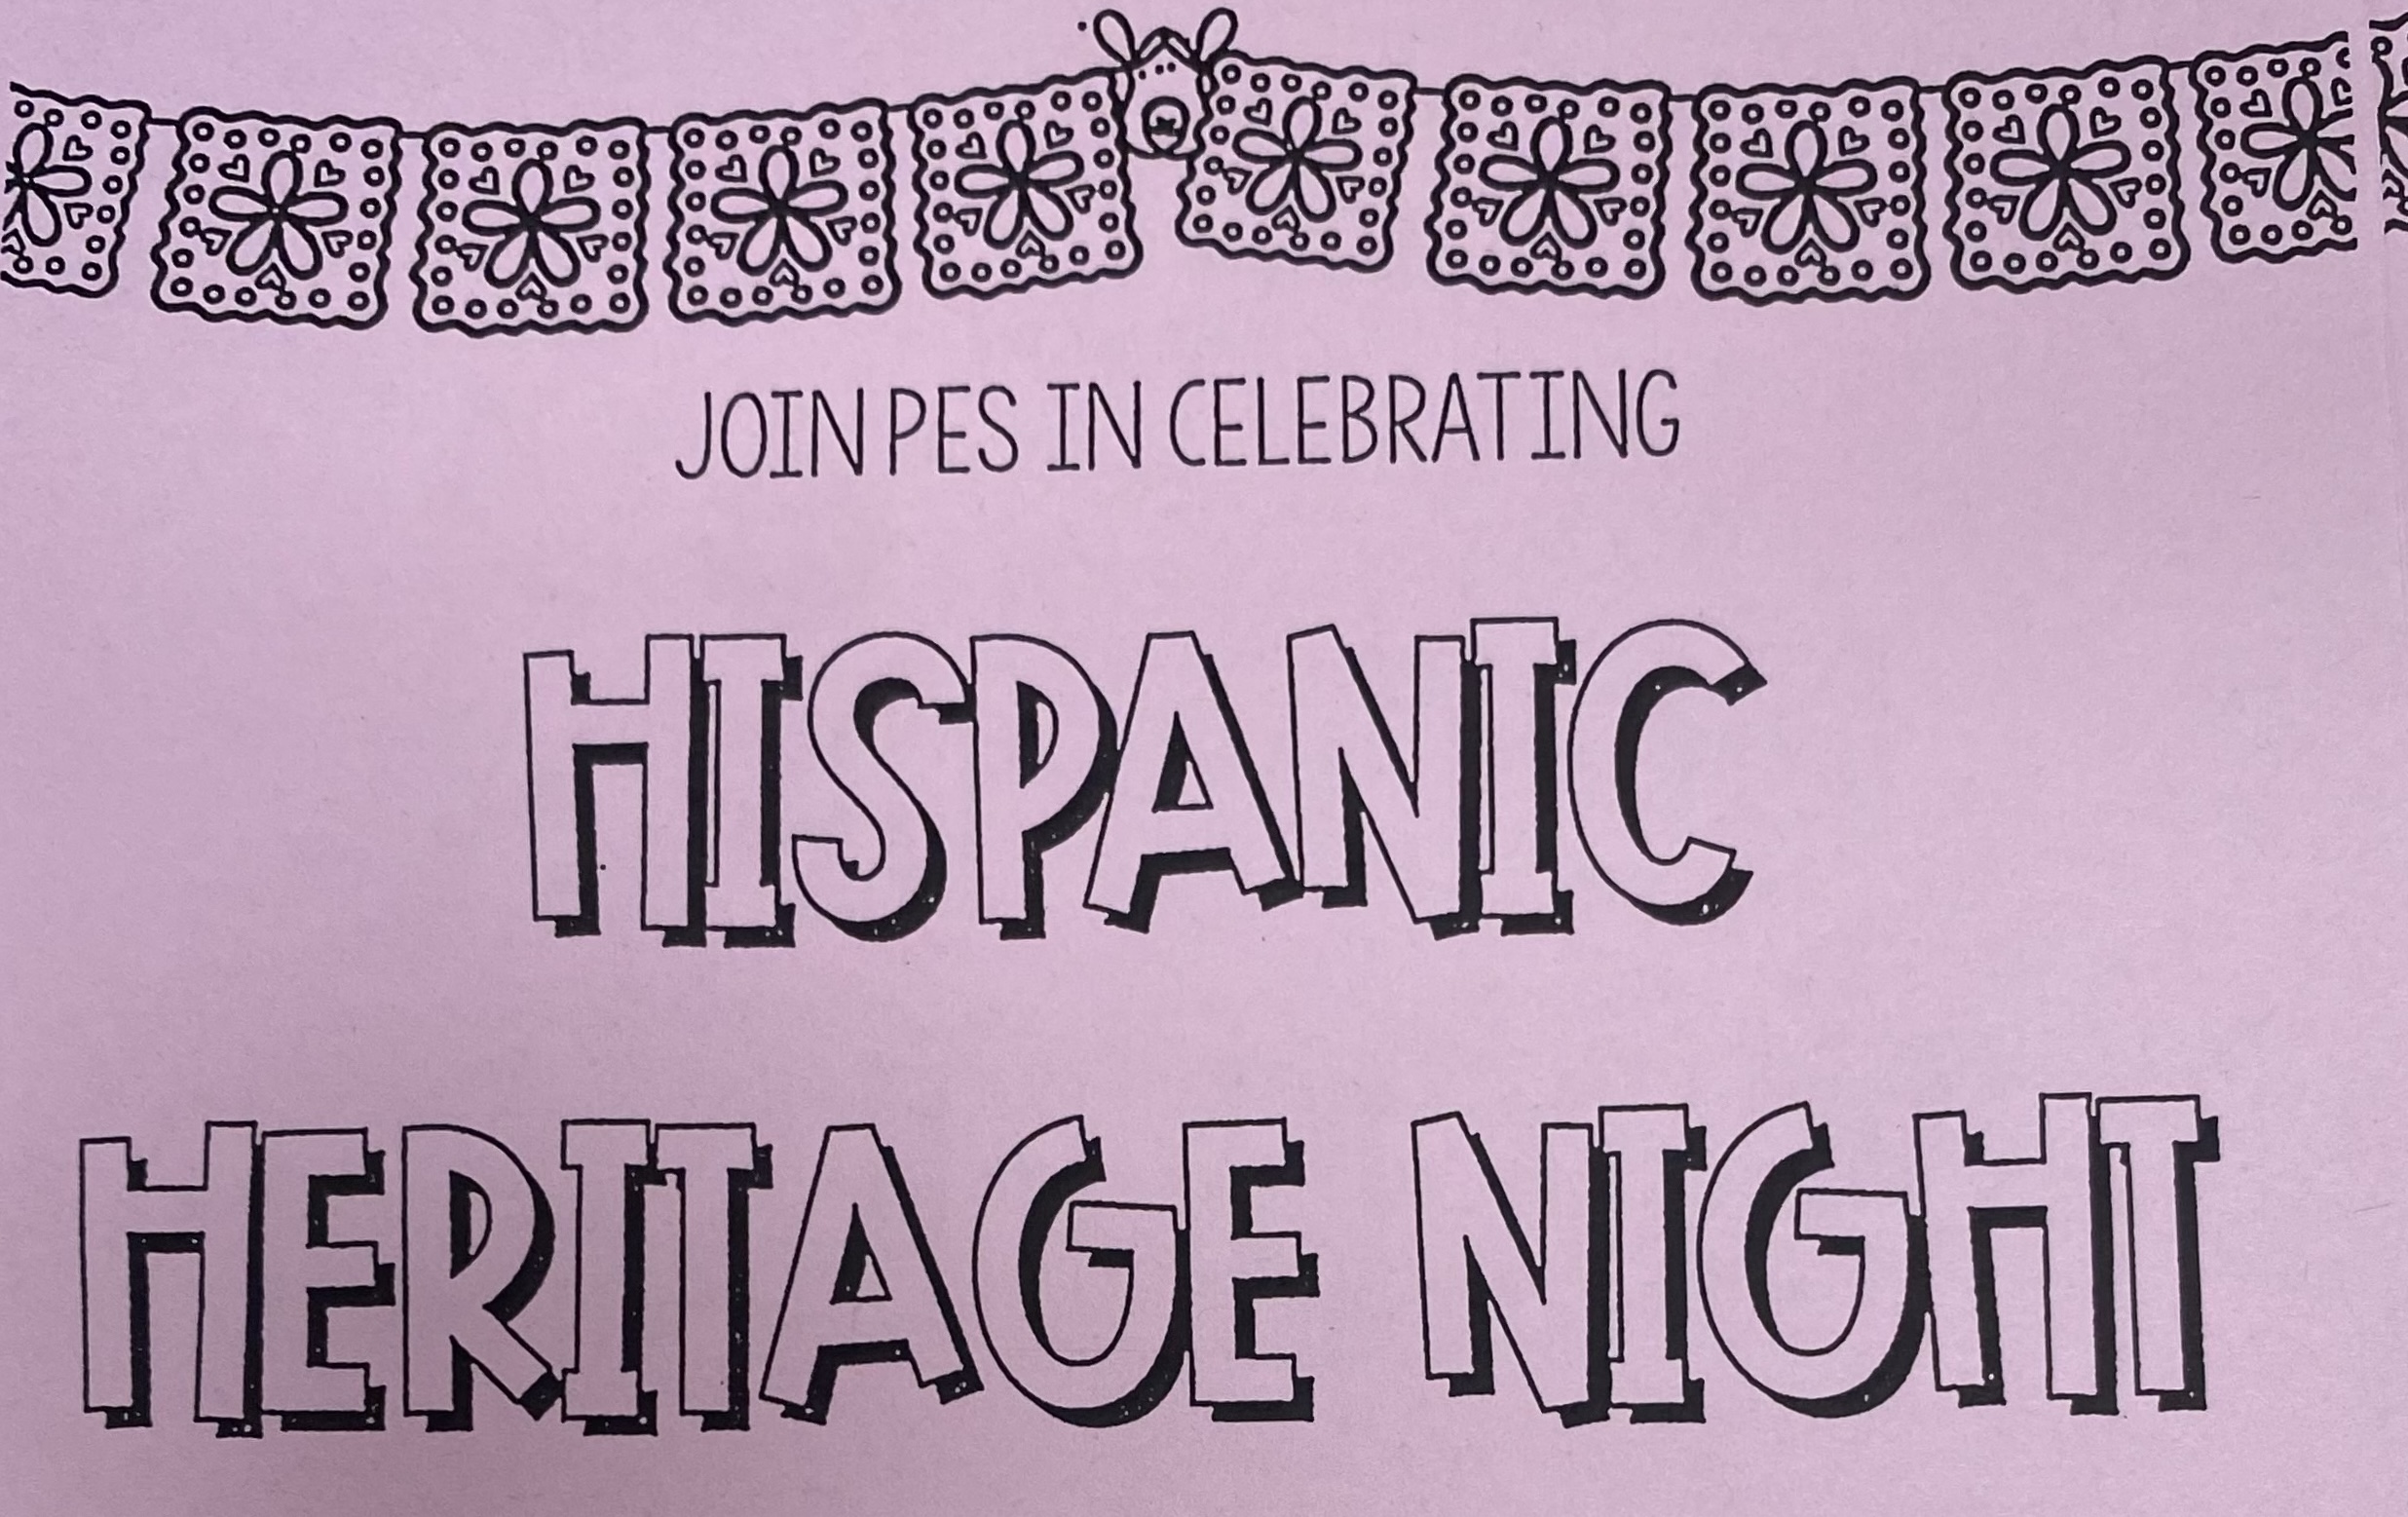 Pinson Elementary to host ‘Hispanic Heritage Night’